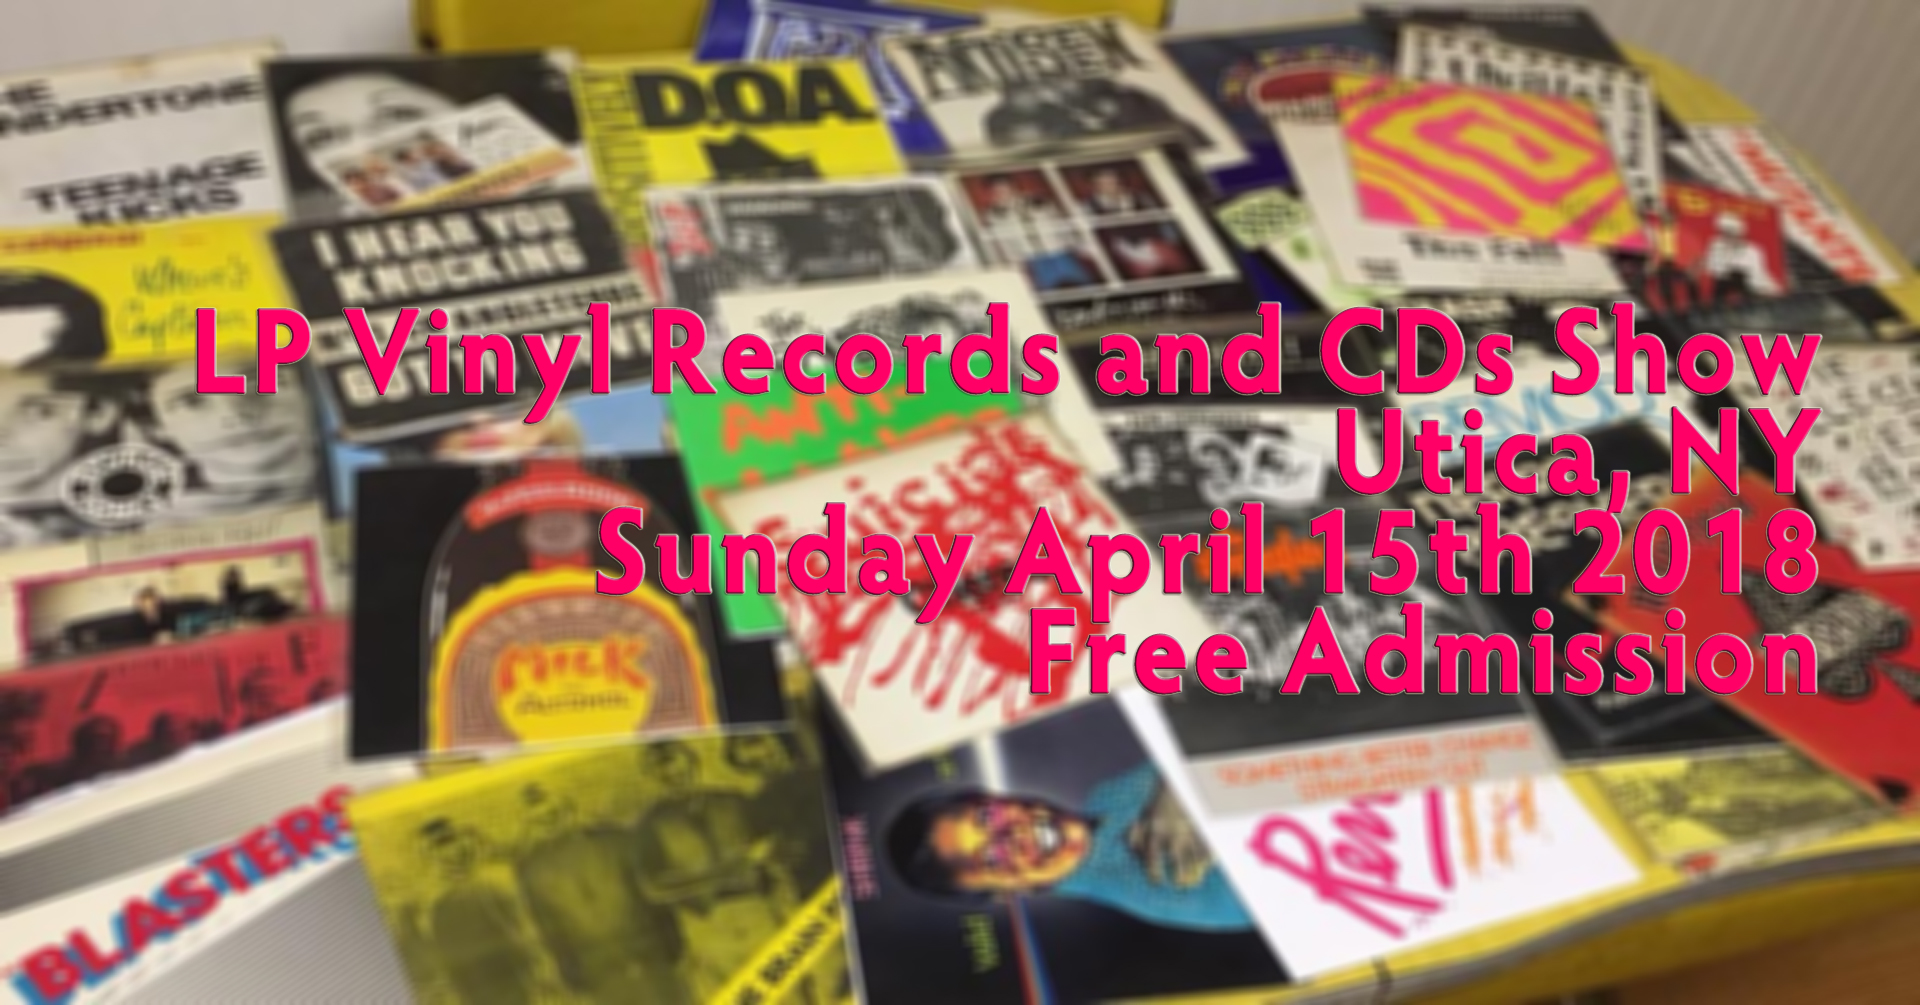 Utica, NY – LP Vinyl Records & CD Show – Sunday April 15th, 2018 – Free Admission